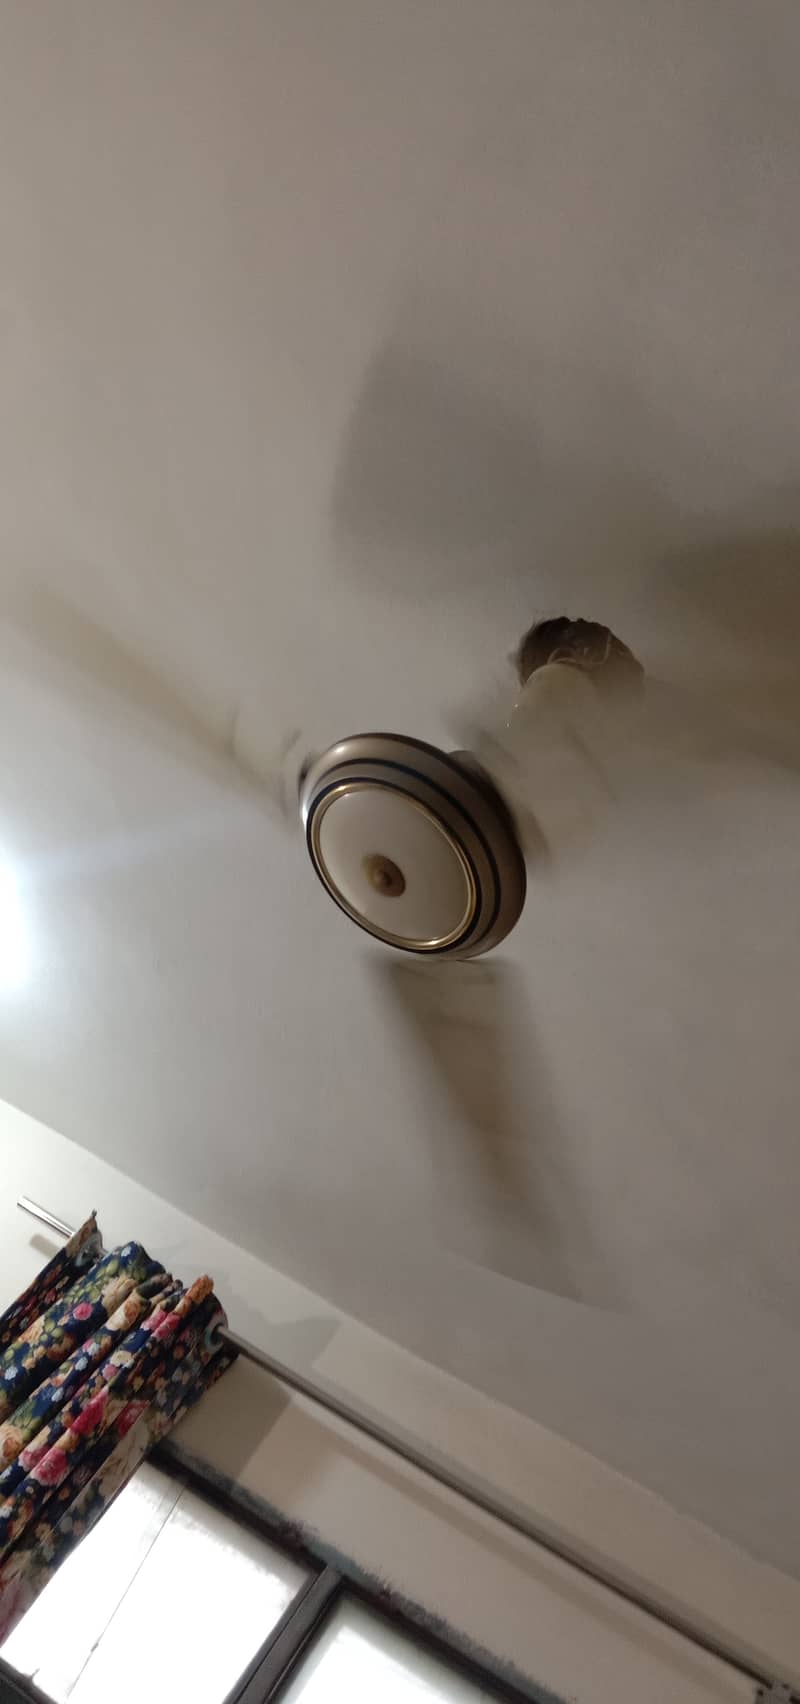 Ceiling fan 220 volt 1